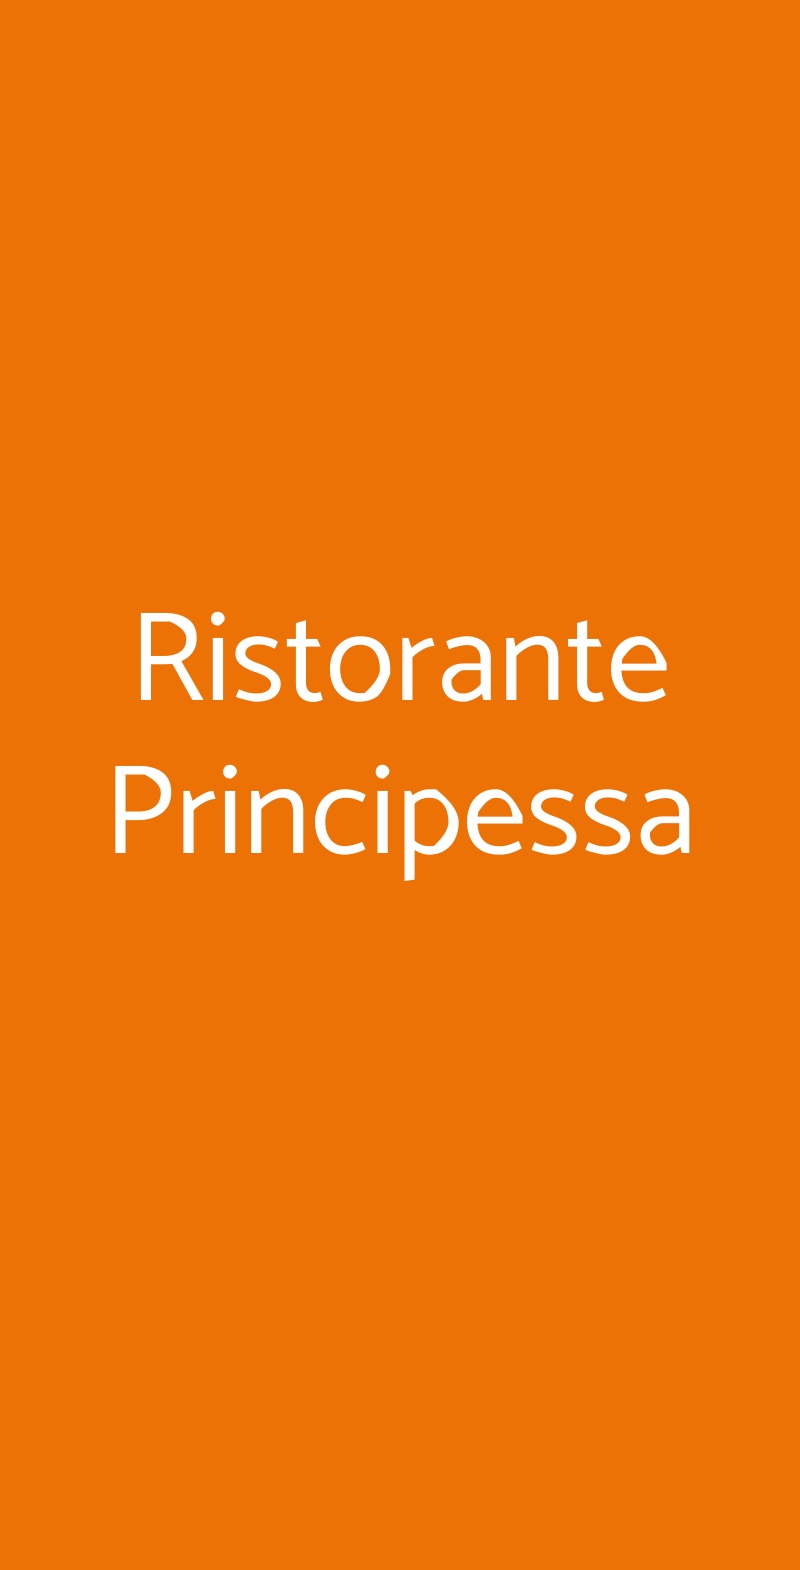 Ristorante Principessa Venezia menù 1 pagina